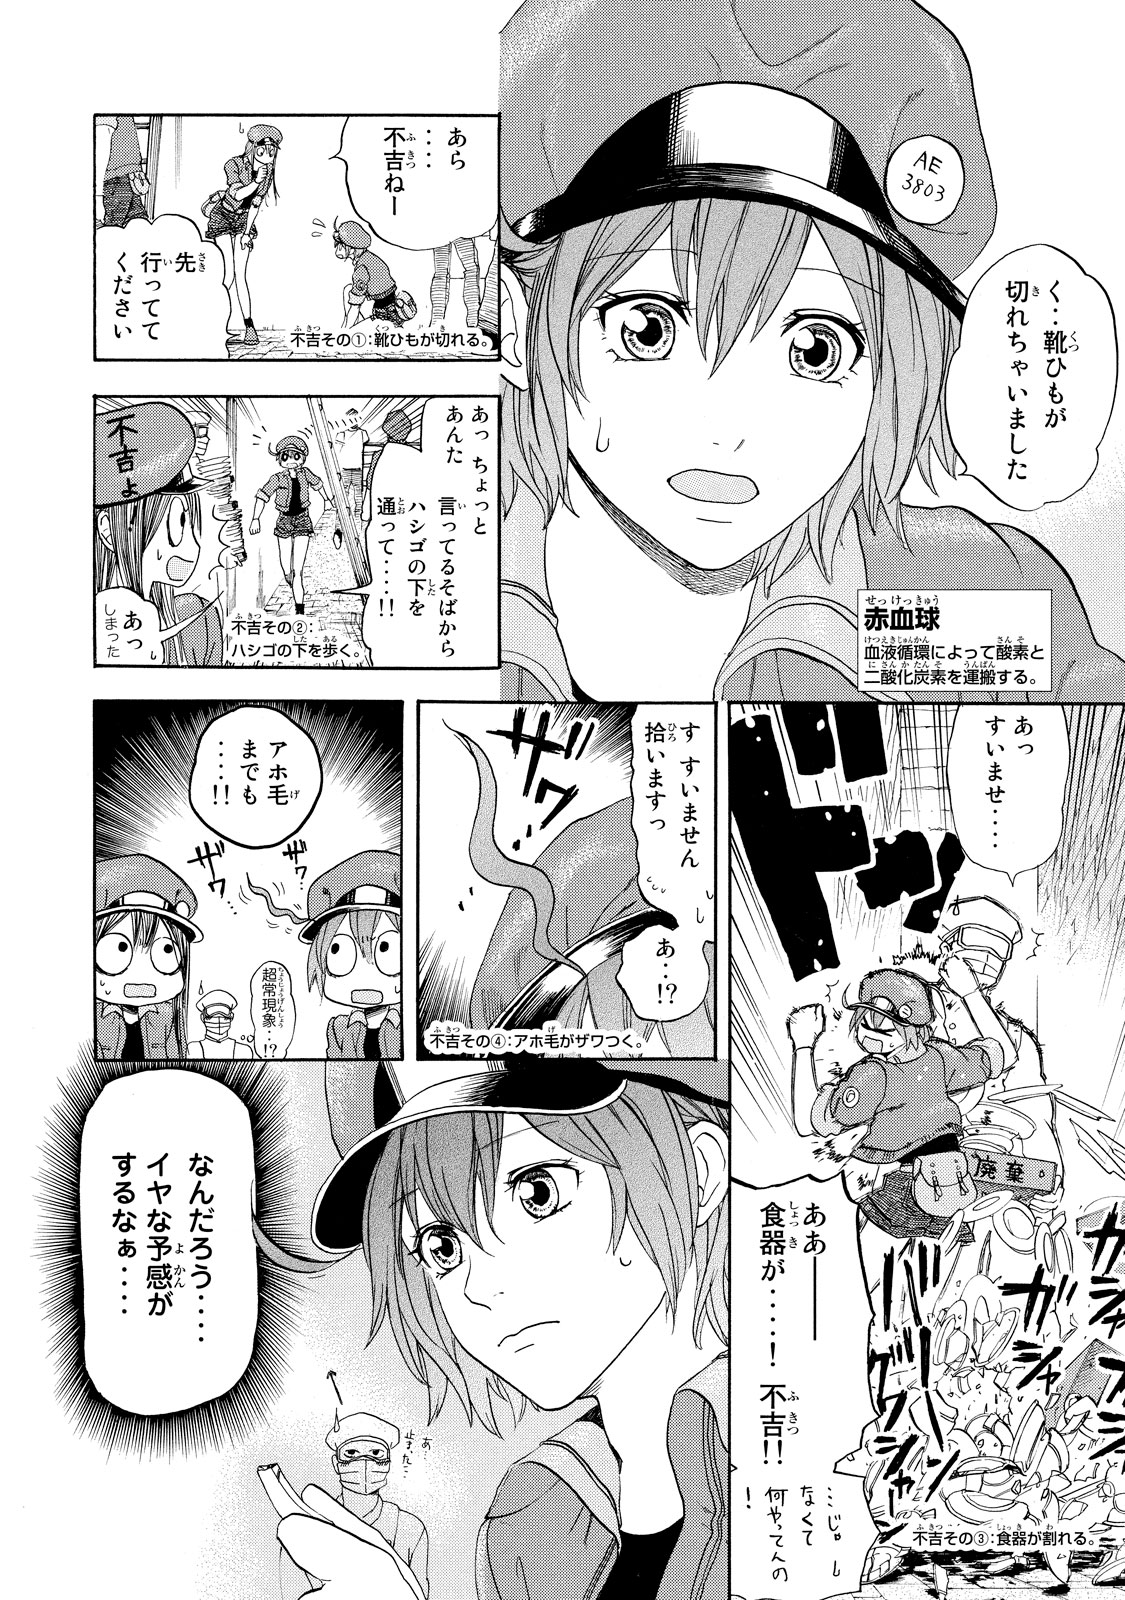 Hataraku Saibou - Chapter 8 - Page 16